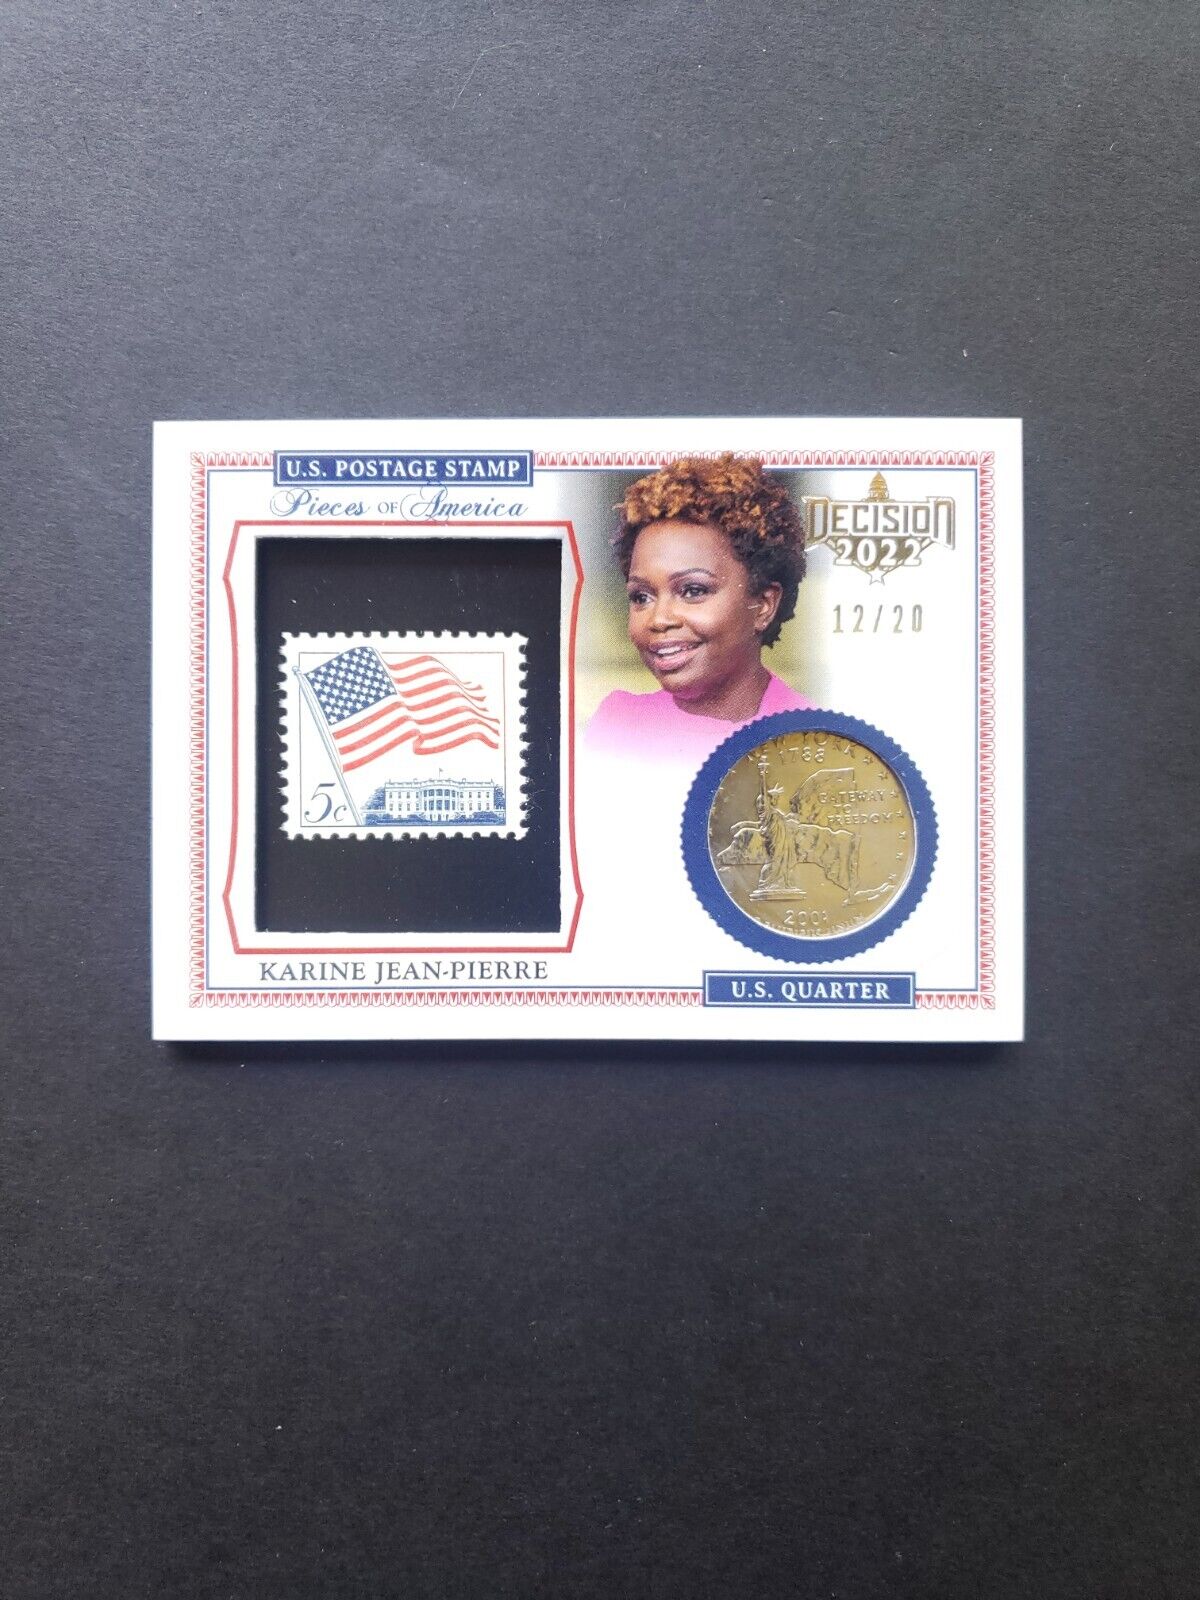 Decision 2022 Karine Jean-Pierre /20 Postage Stamp Peices of America POA18